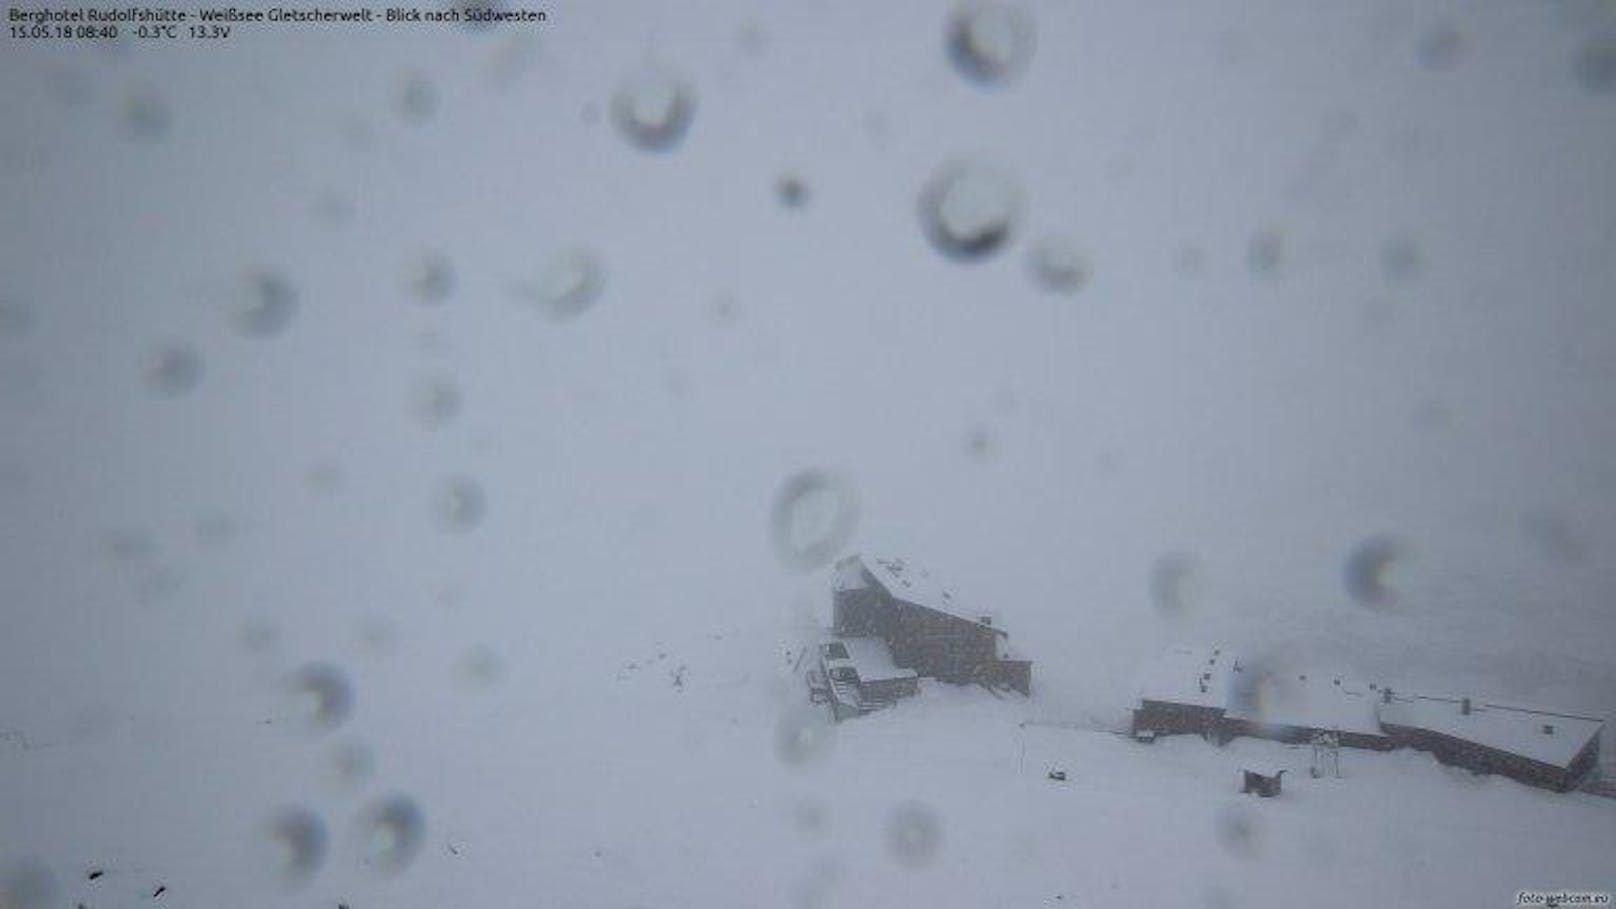 Schneefall am Dienstag in etwa 2.300 m Höhe. (Quelle: www.foto-webcam.eu)